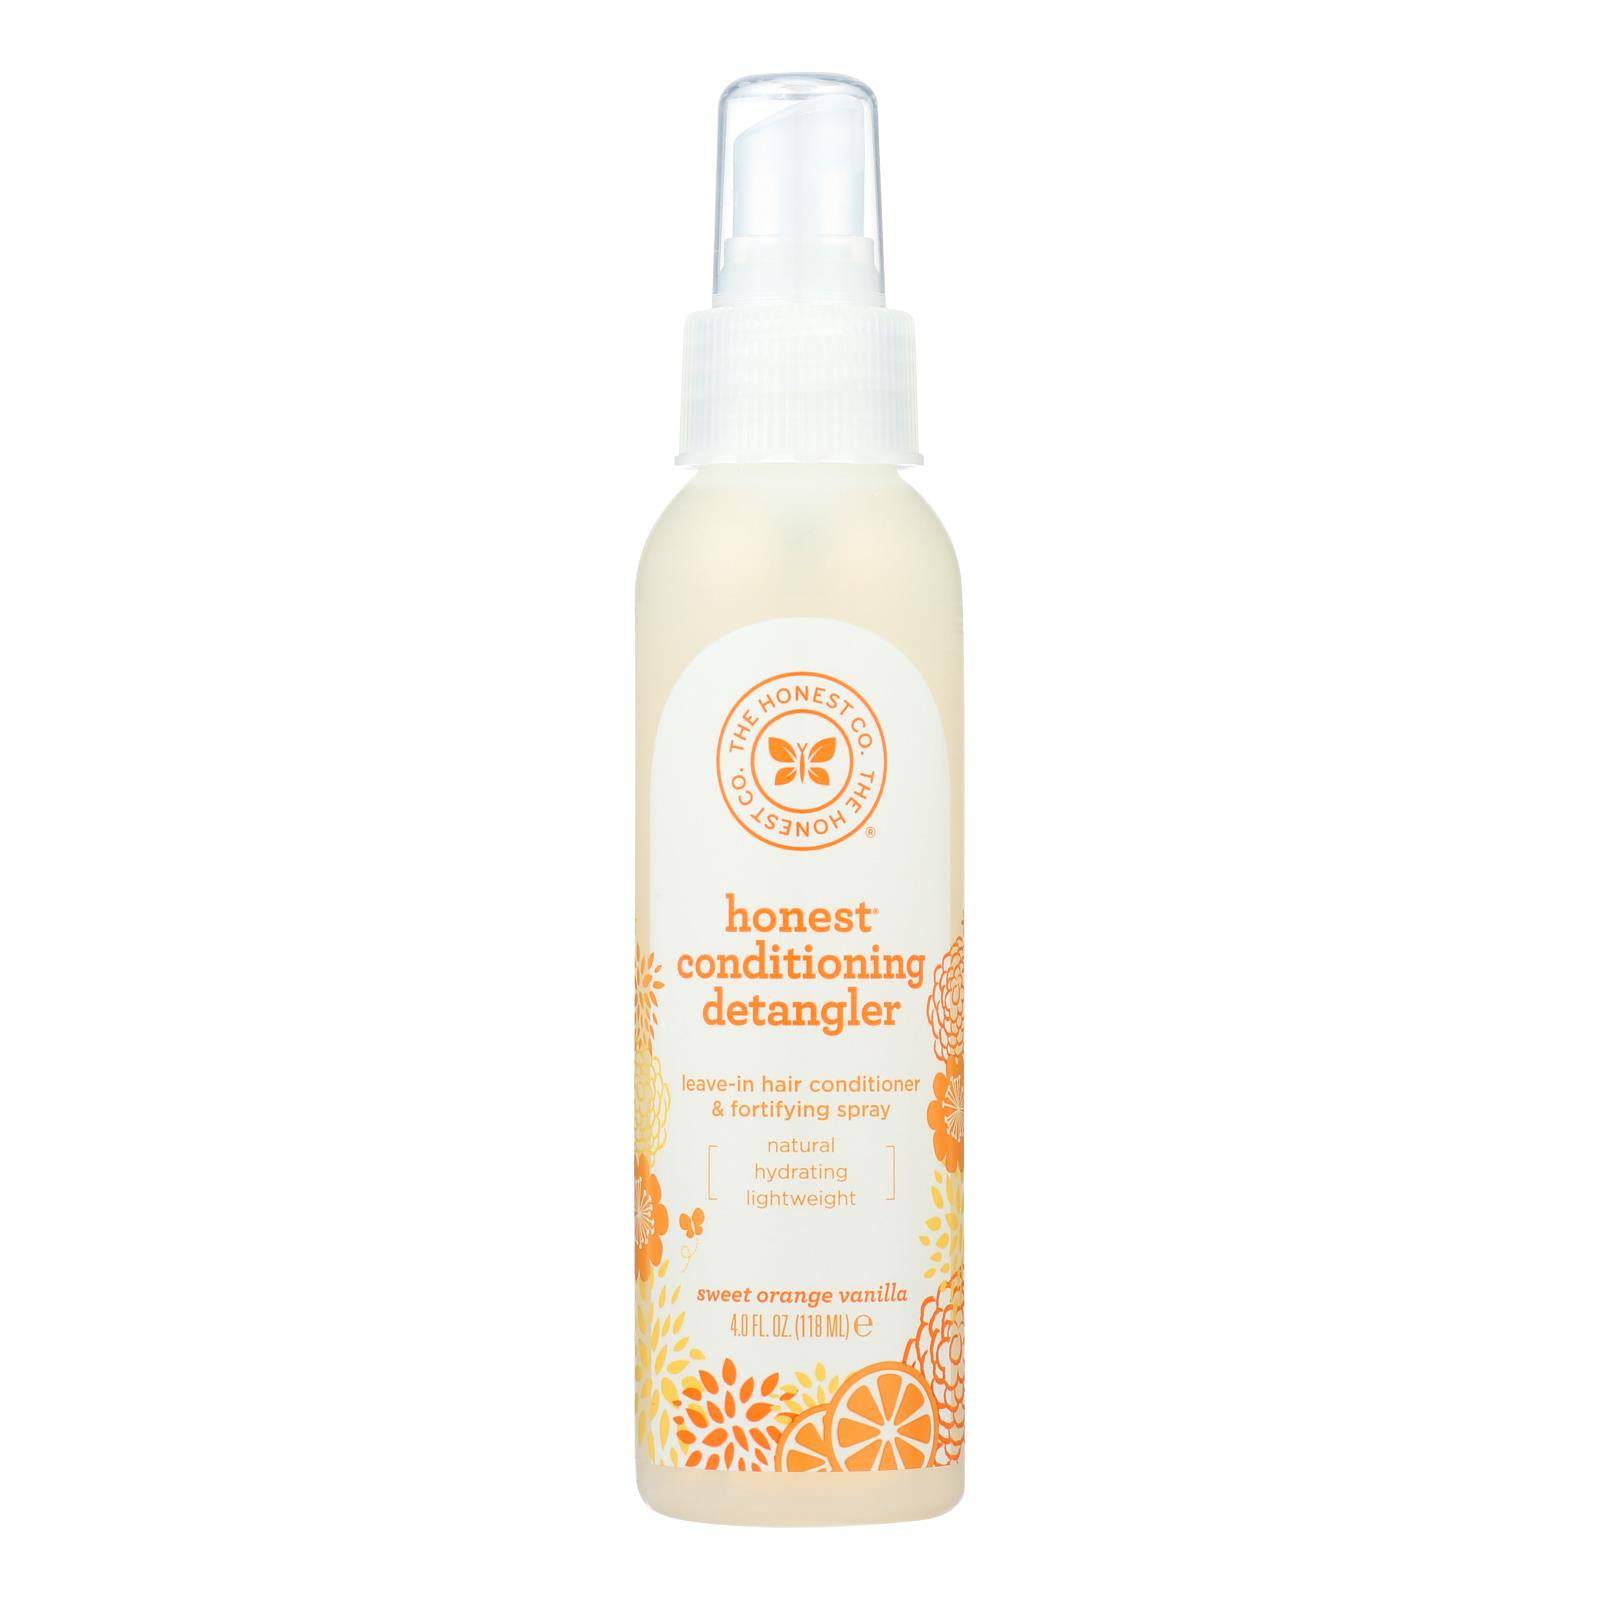 Buy The Honest Company Honest Conditioning Detangler - Sweet Orange Vanilla - 4 Oz  at OnlyNaturals.us